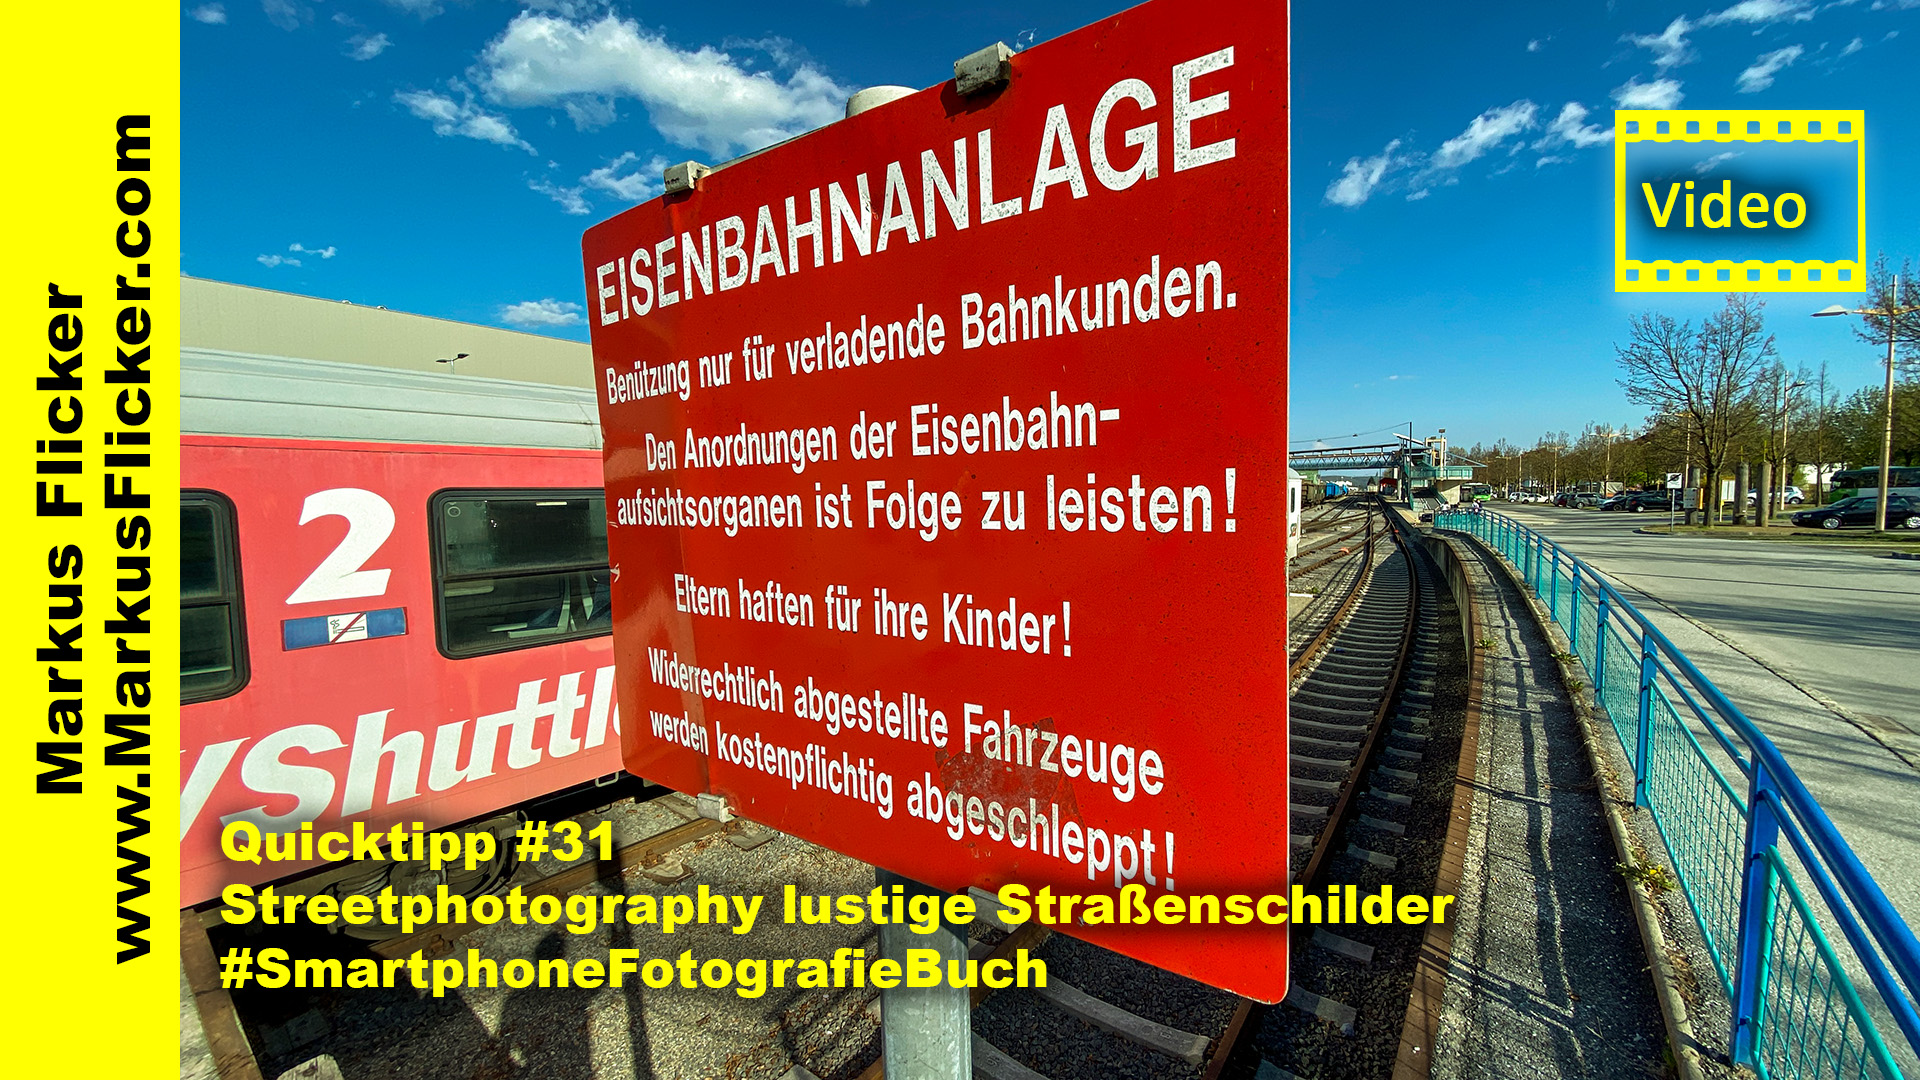 Quicktipp #31 Streetphotography lustige Straßenschilder #SmartphoneFotografieBuch #markusflicker